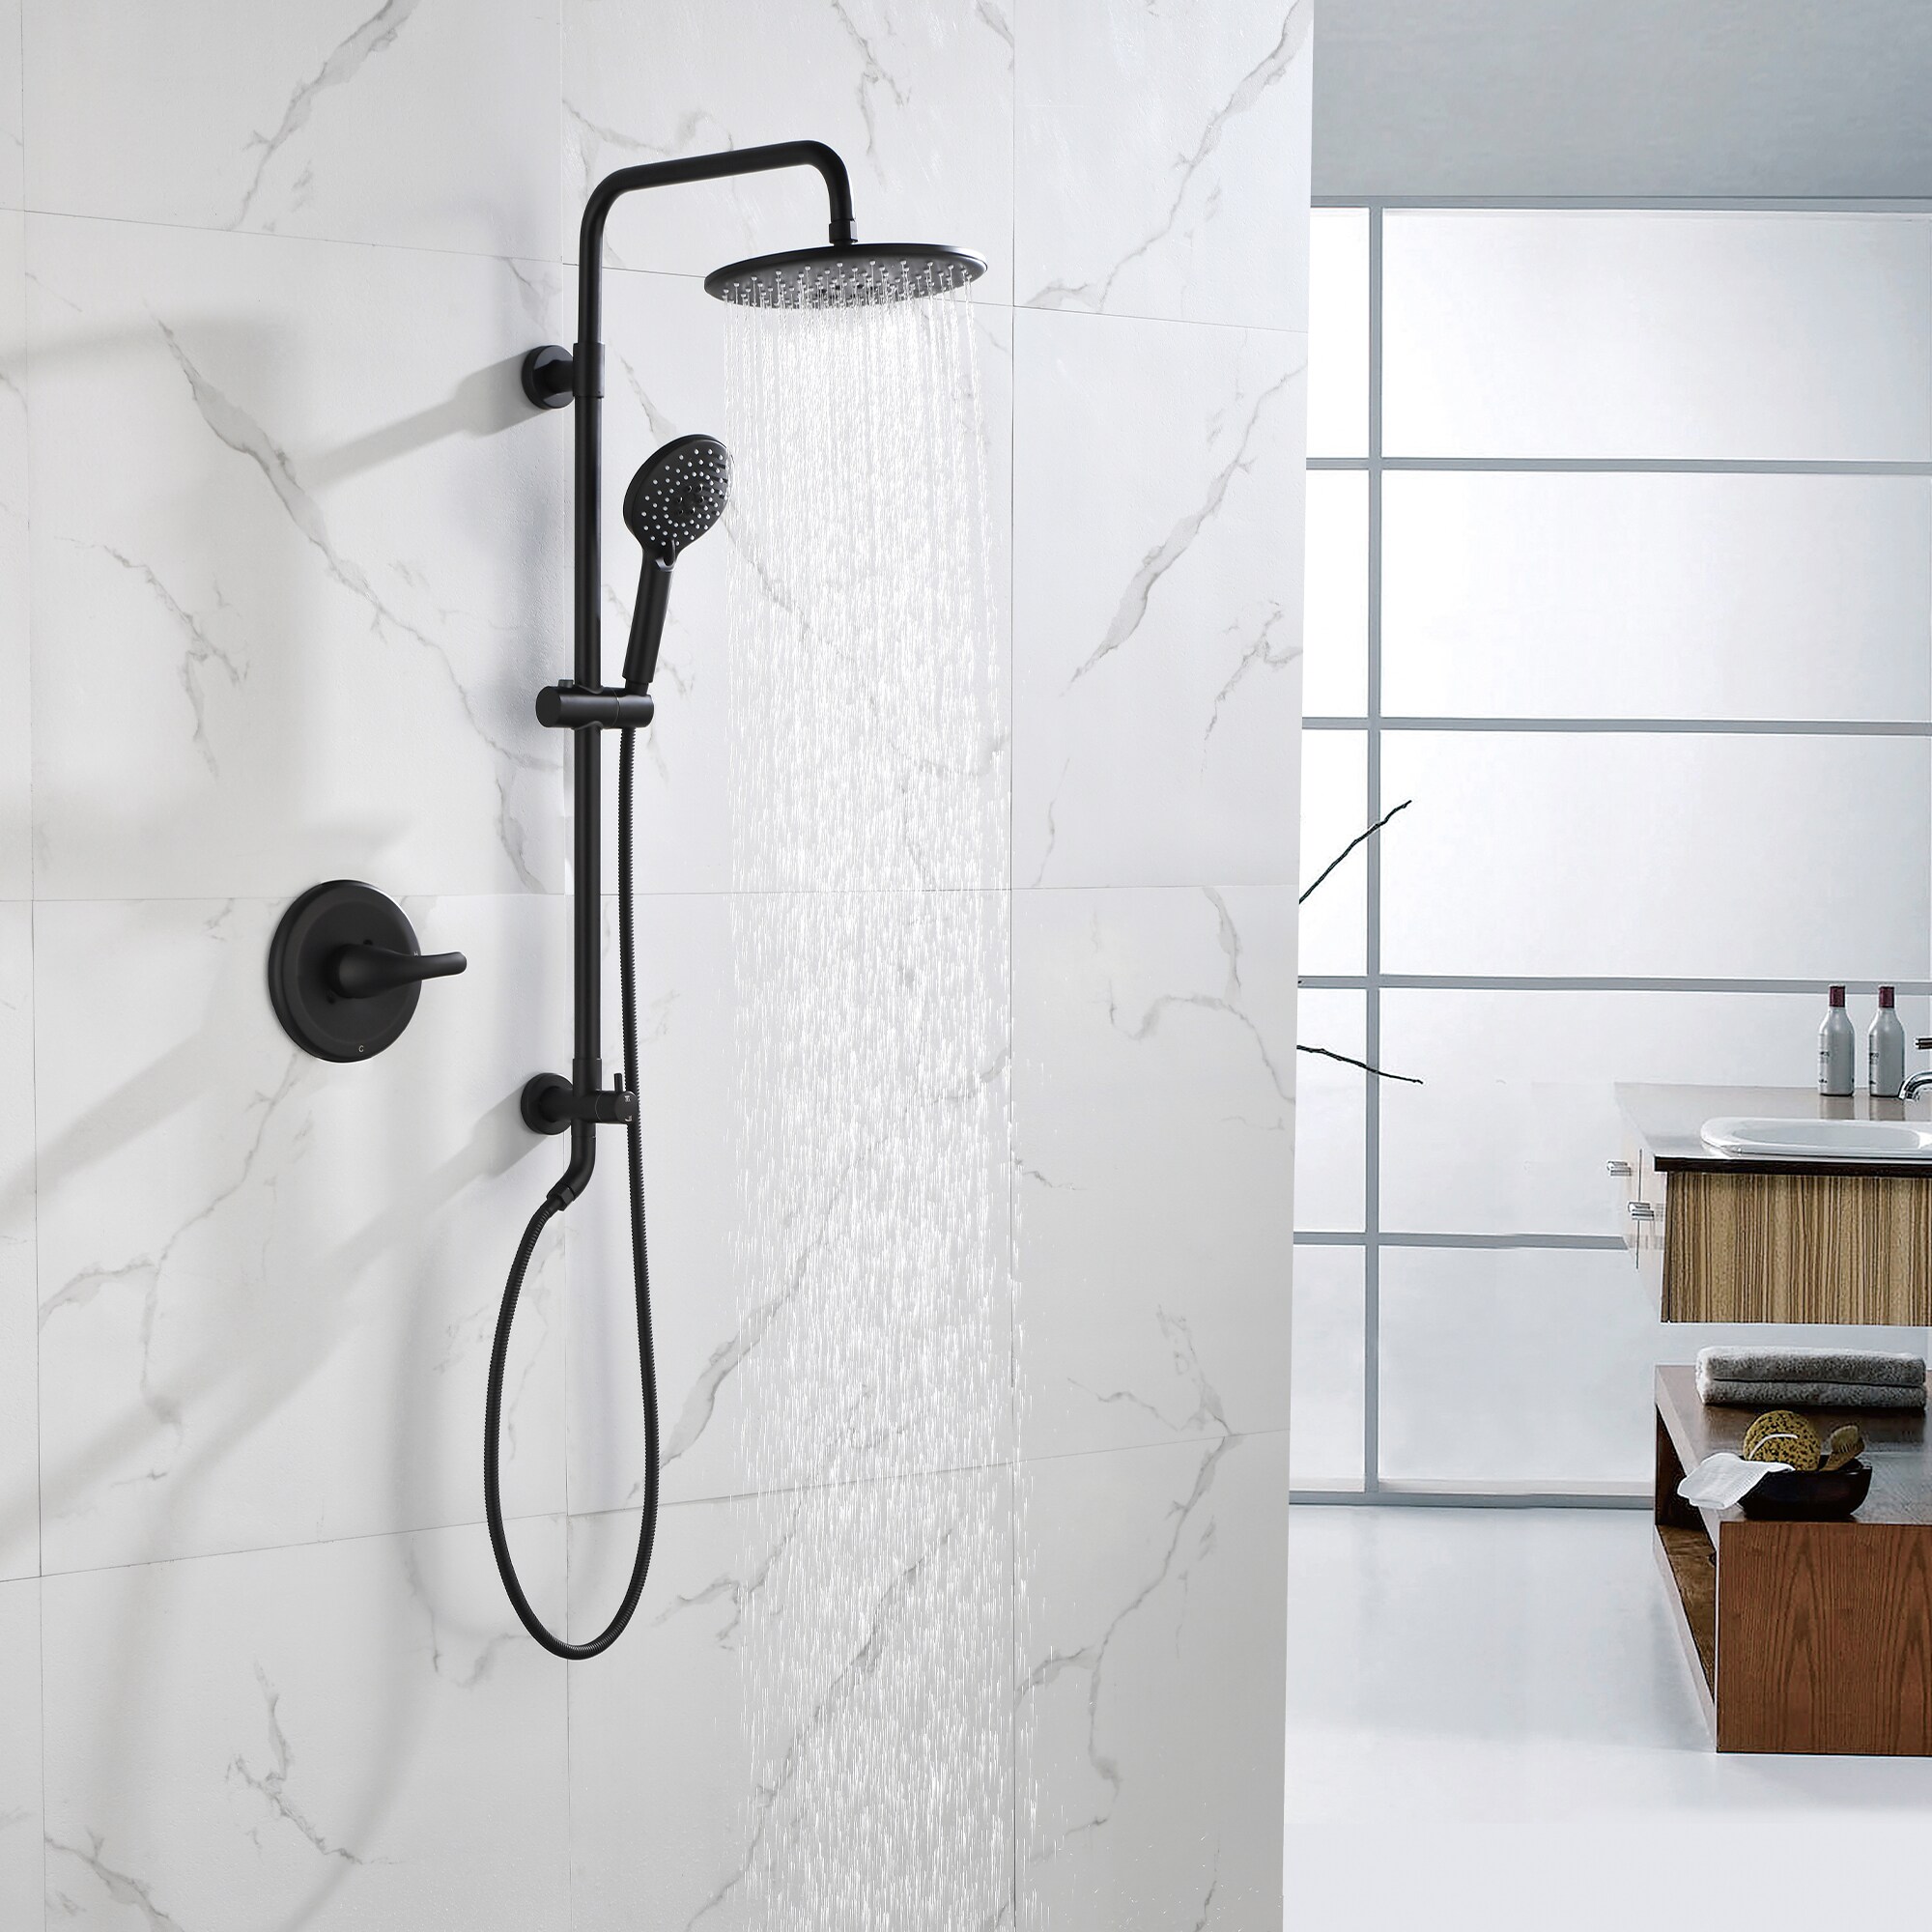 BM-TRES built-in shower faucet with shower set, Chromium